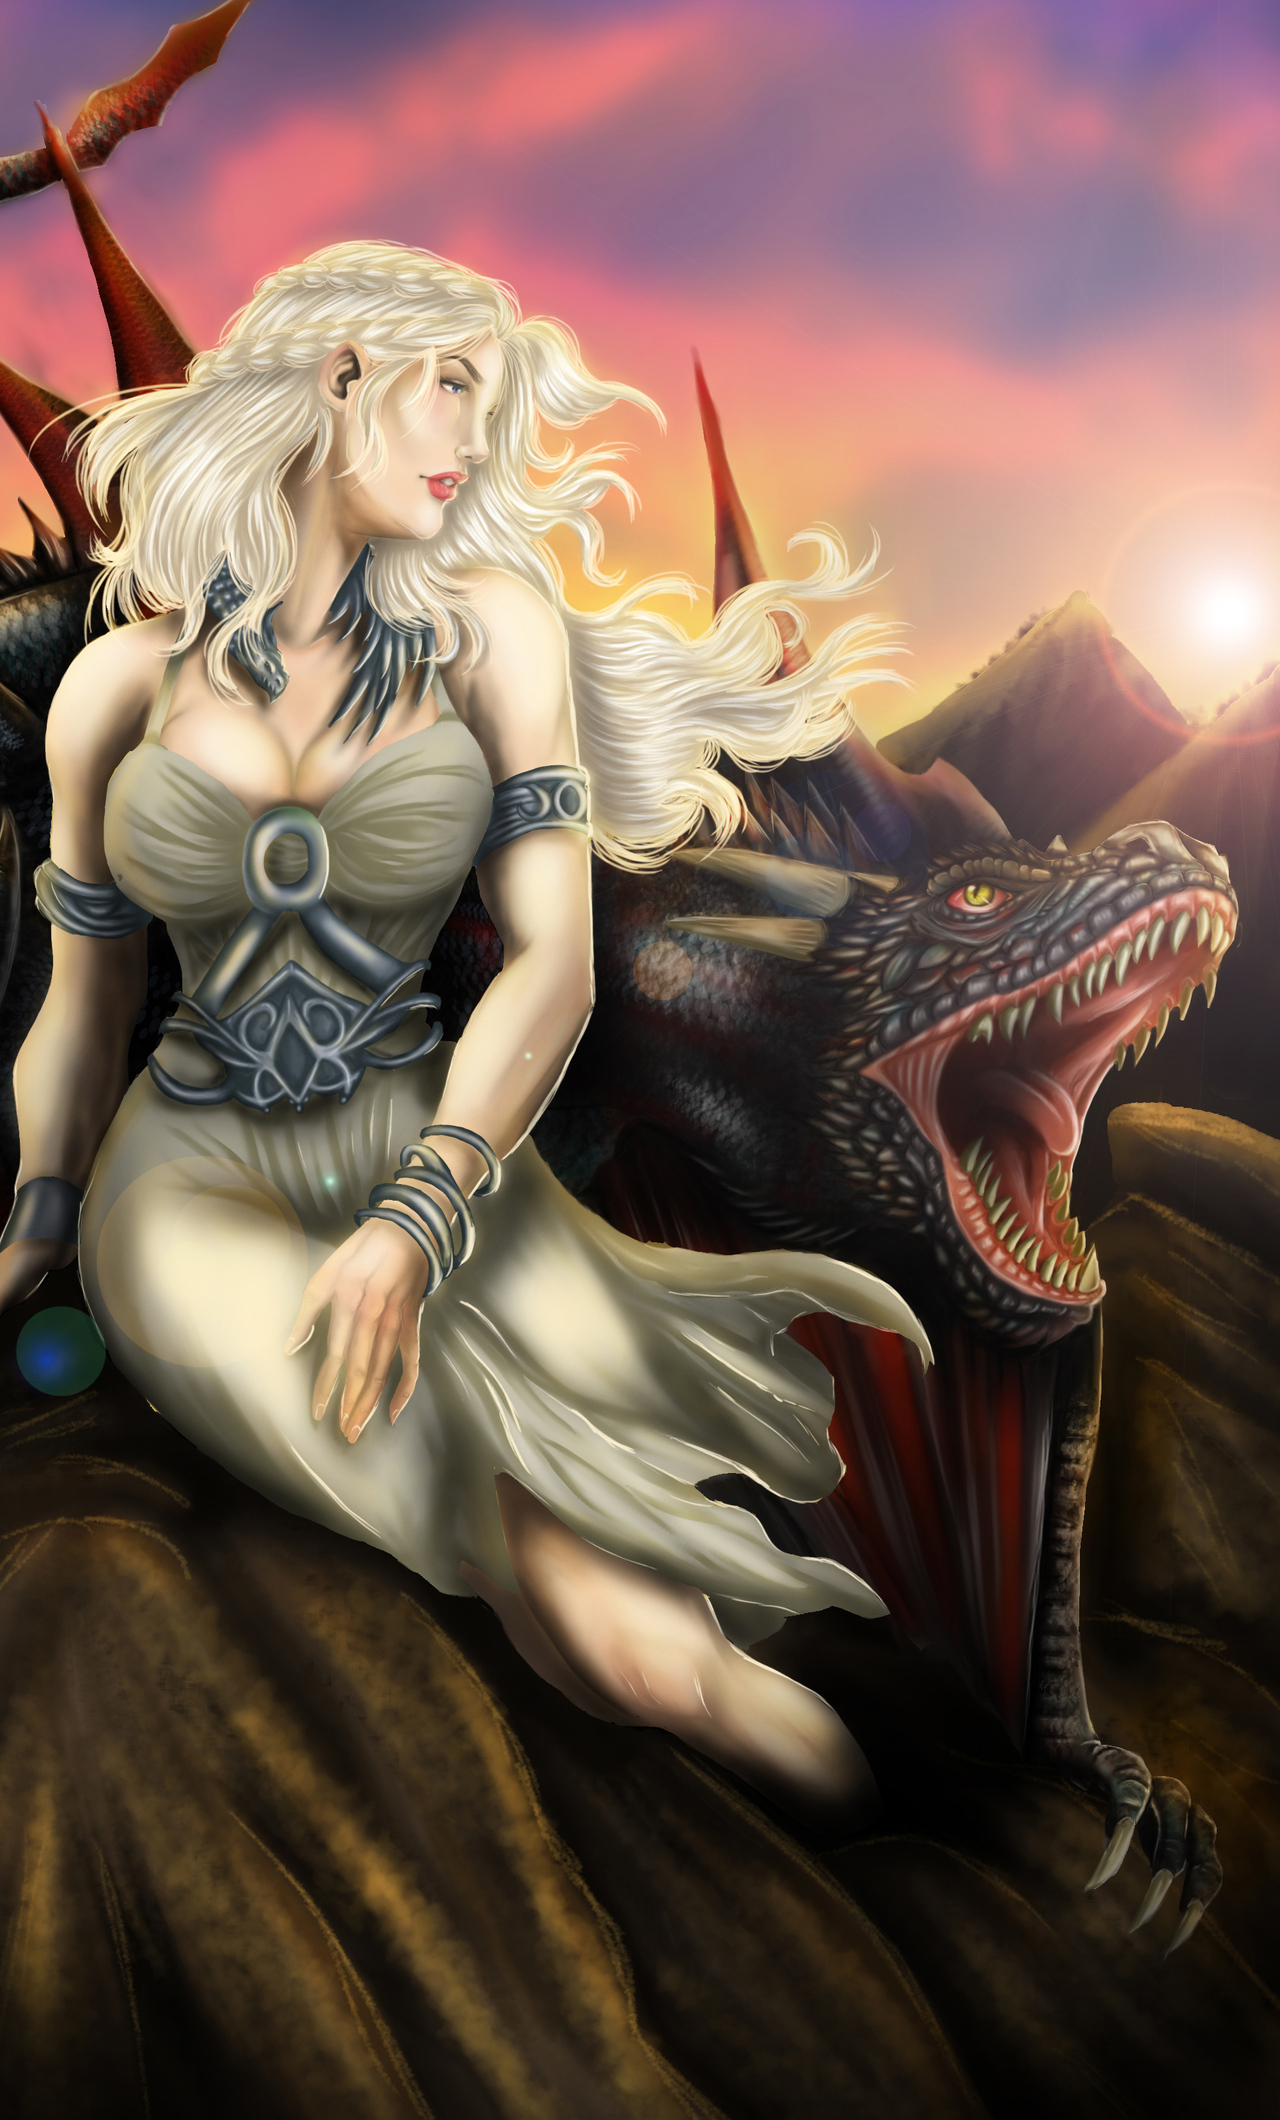 daenerys-targaryen-and-dragon-fan-artwork-w6.jpg